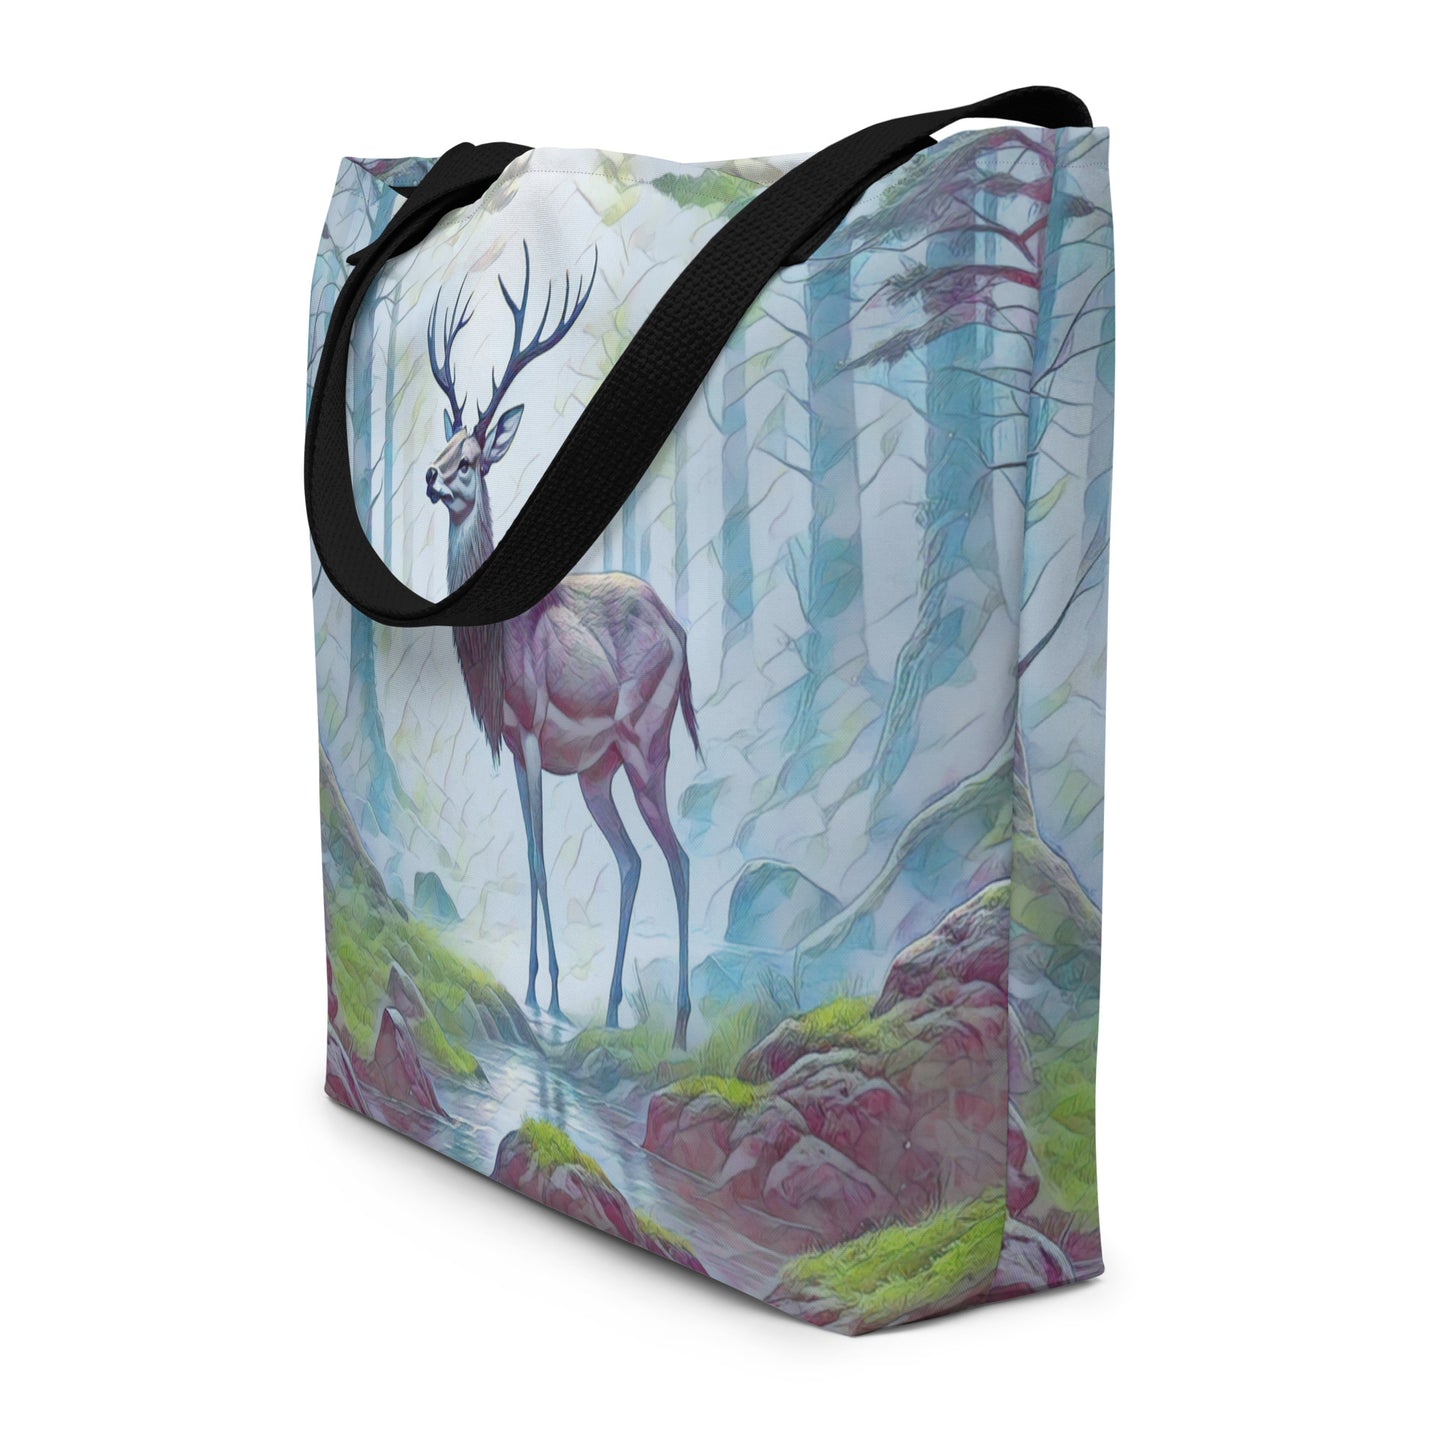 Oregon Deer in the Woods - Digital Art - Large 16x20 Tote Bag W/Pocket $34.95